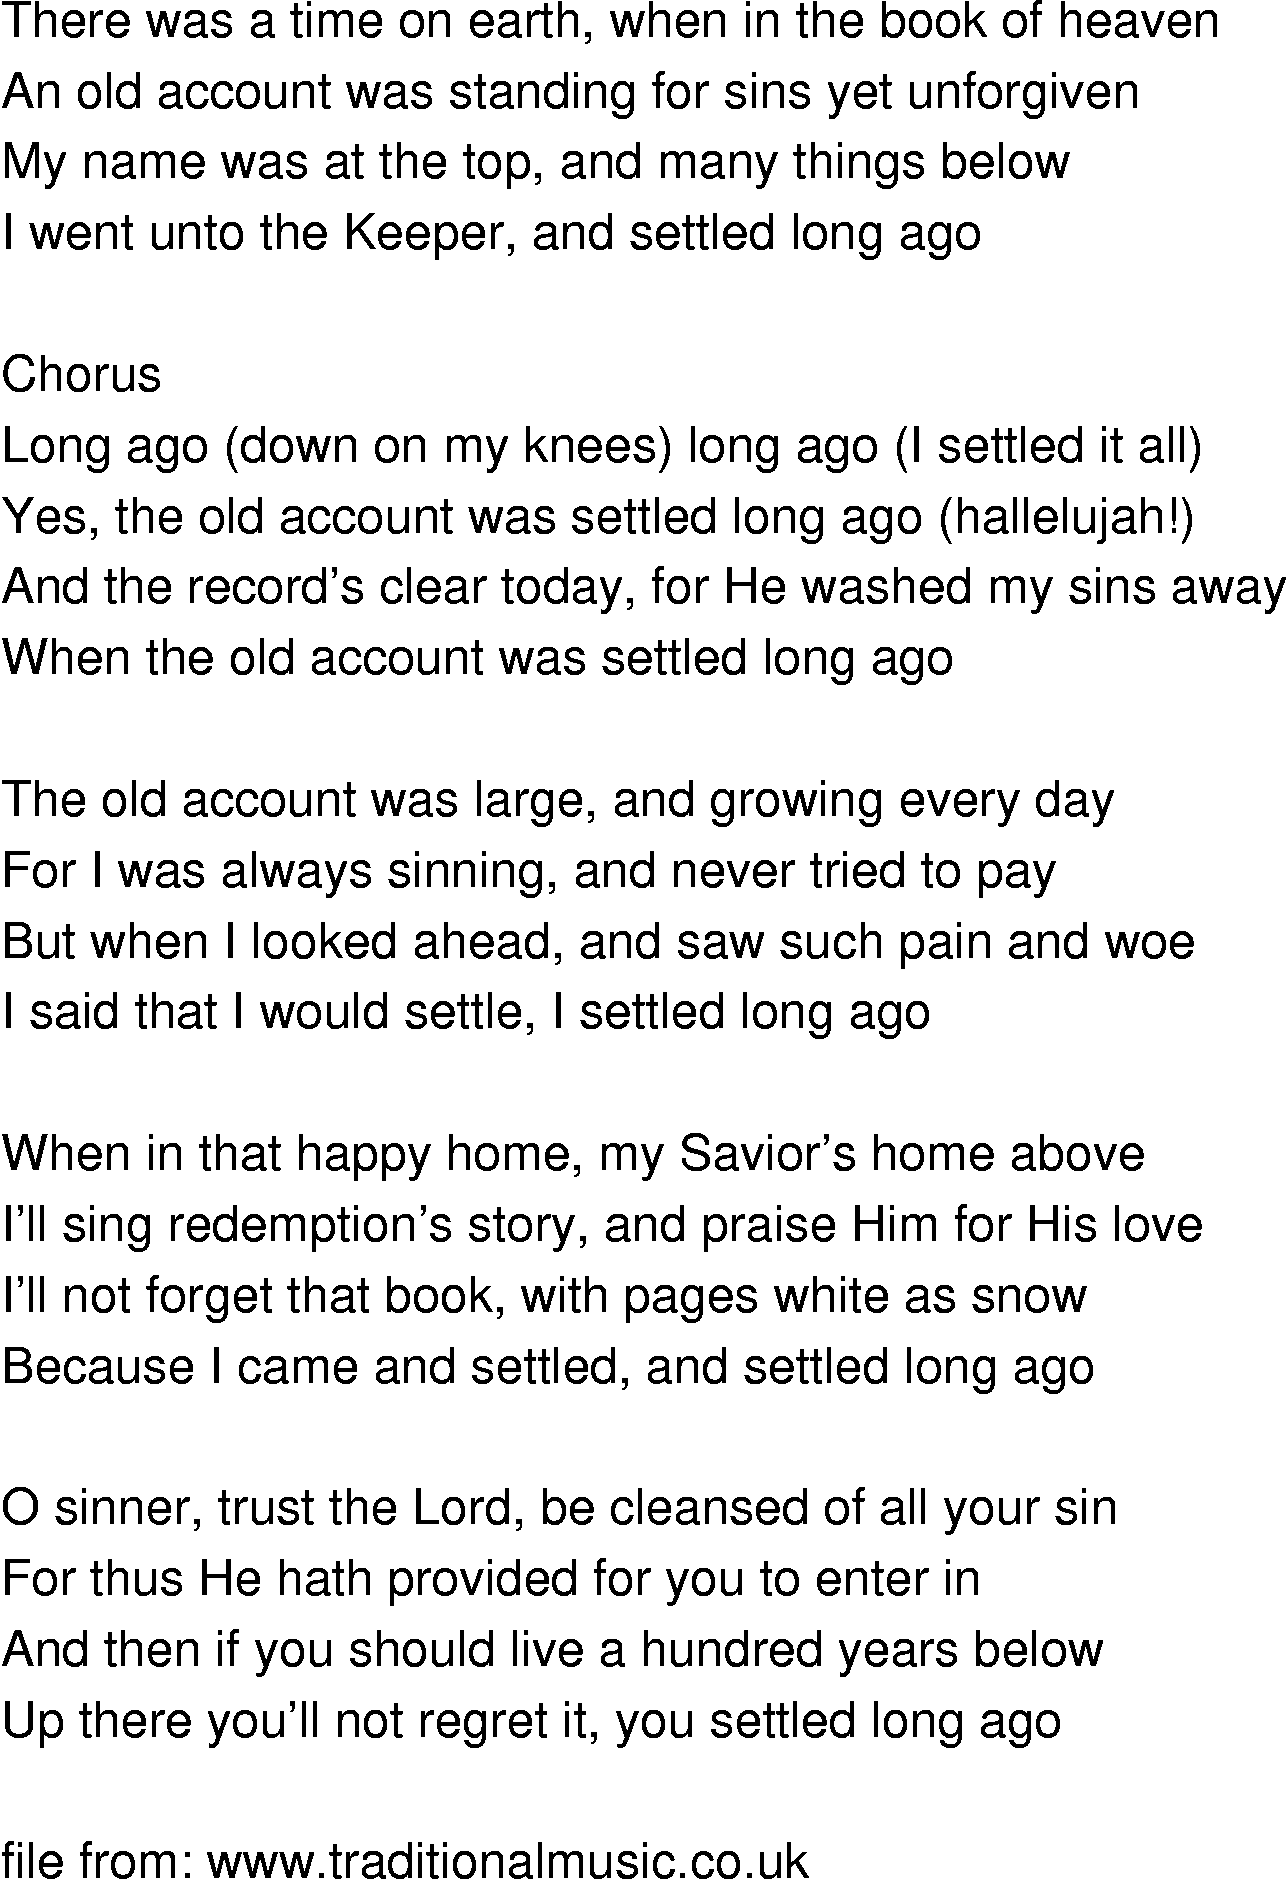 Old-Time (oldtimey) Song Lyrics - old account settled